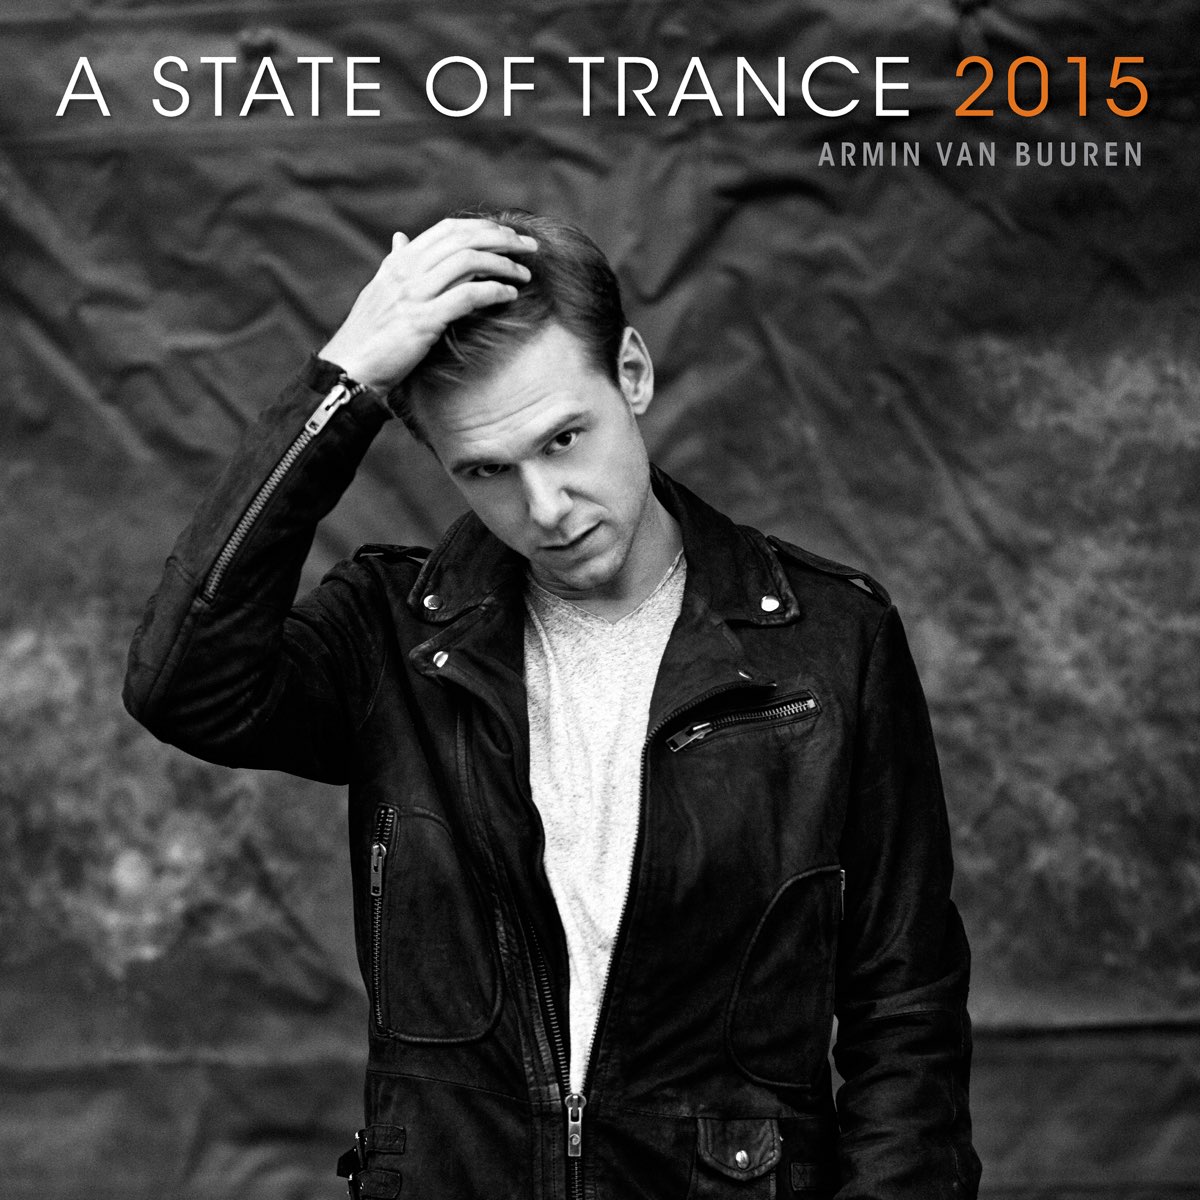 A State of Trance 2015 (Mixed by Armin van Buuren) by Armin van Buuren on  Apple Music